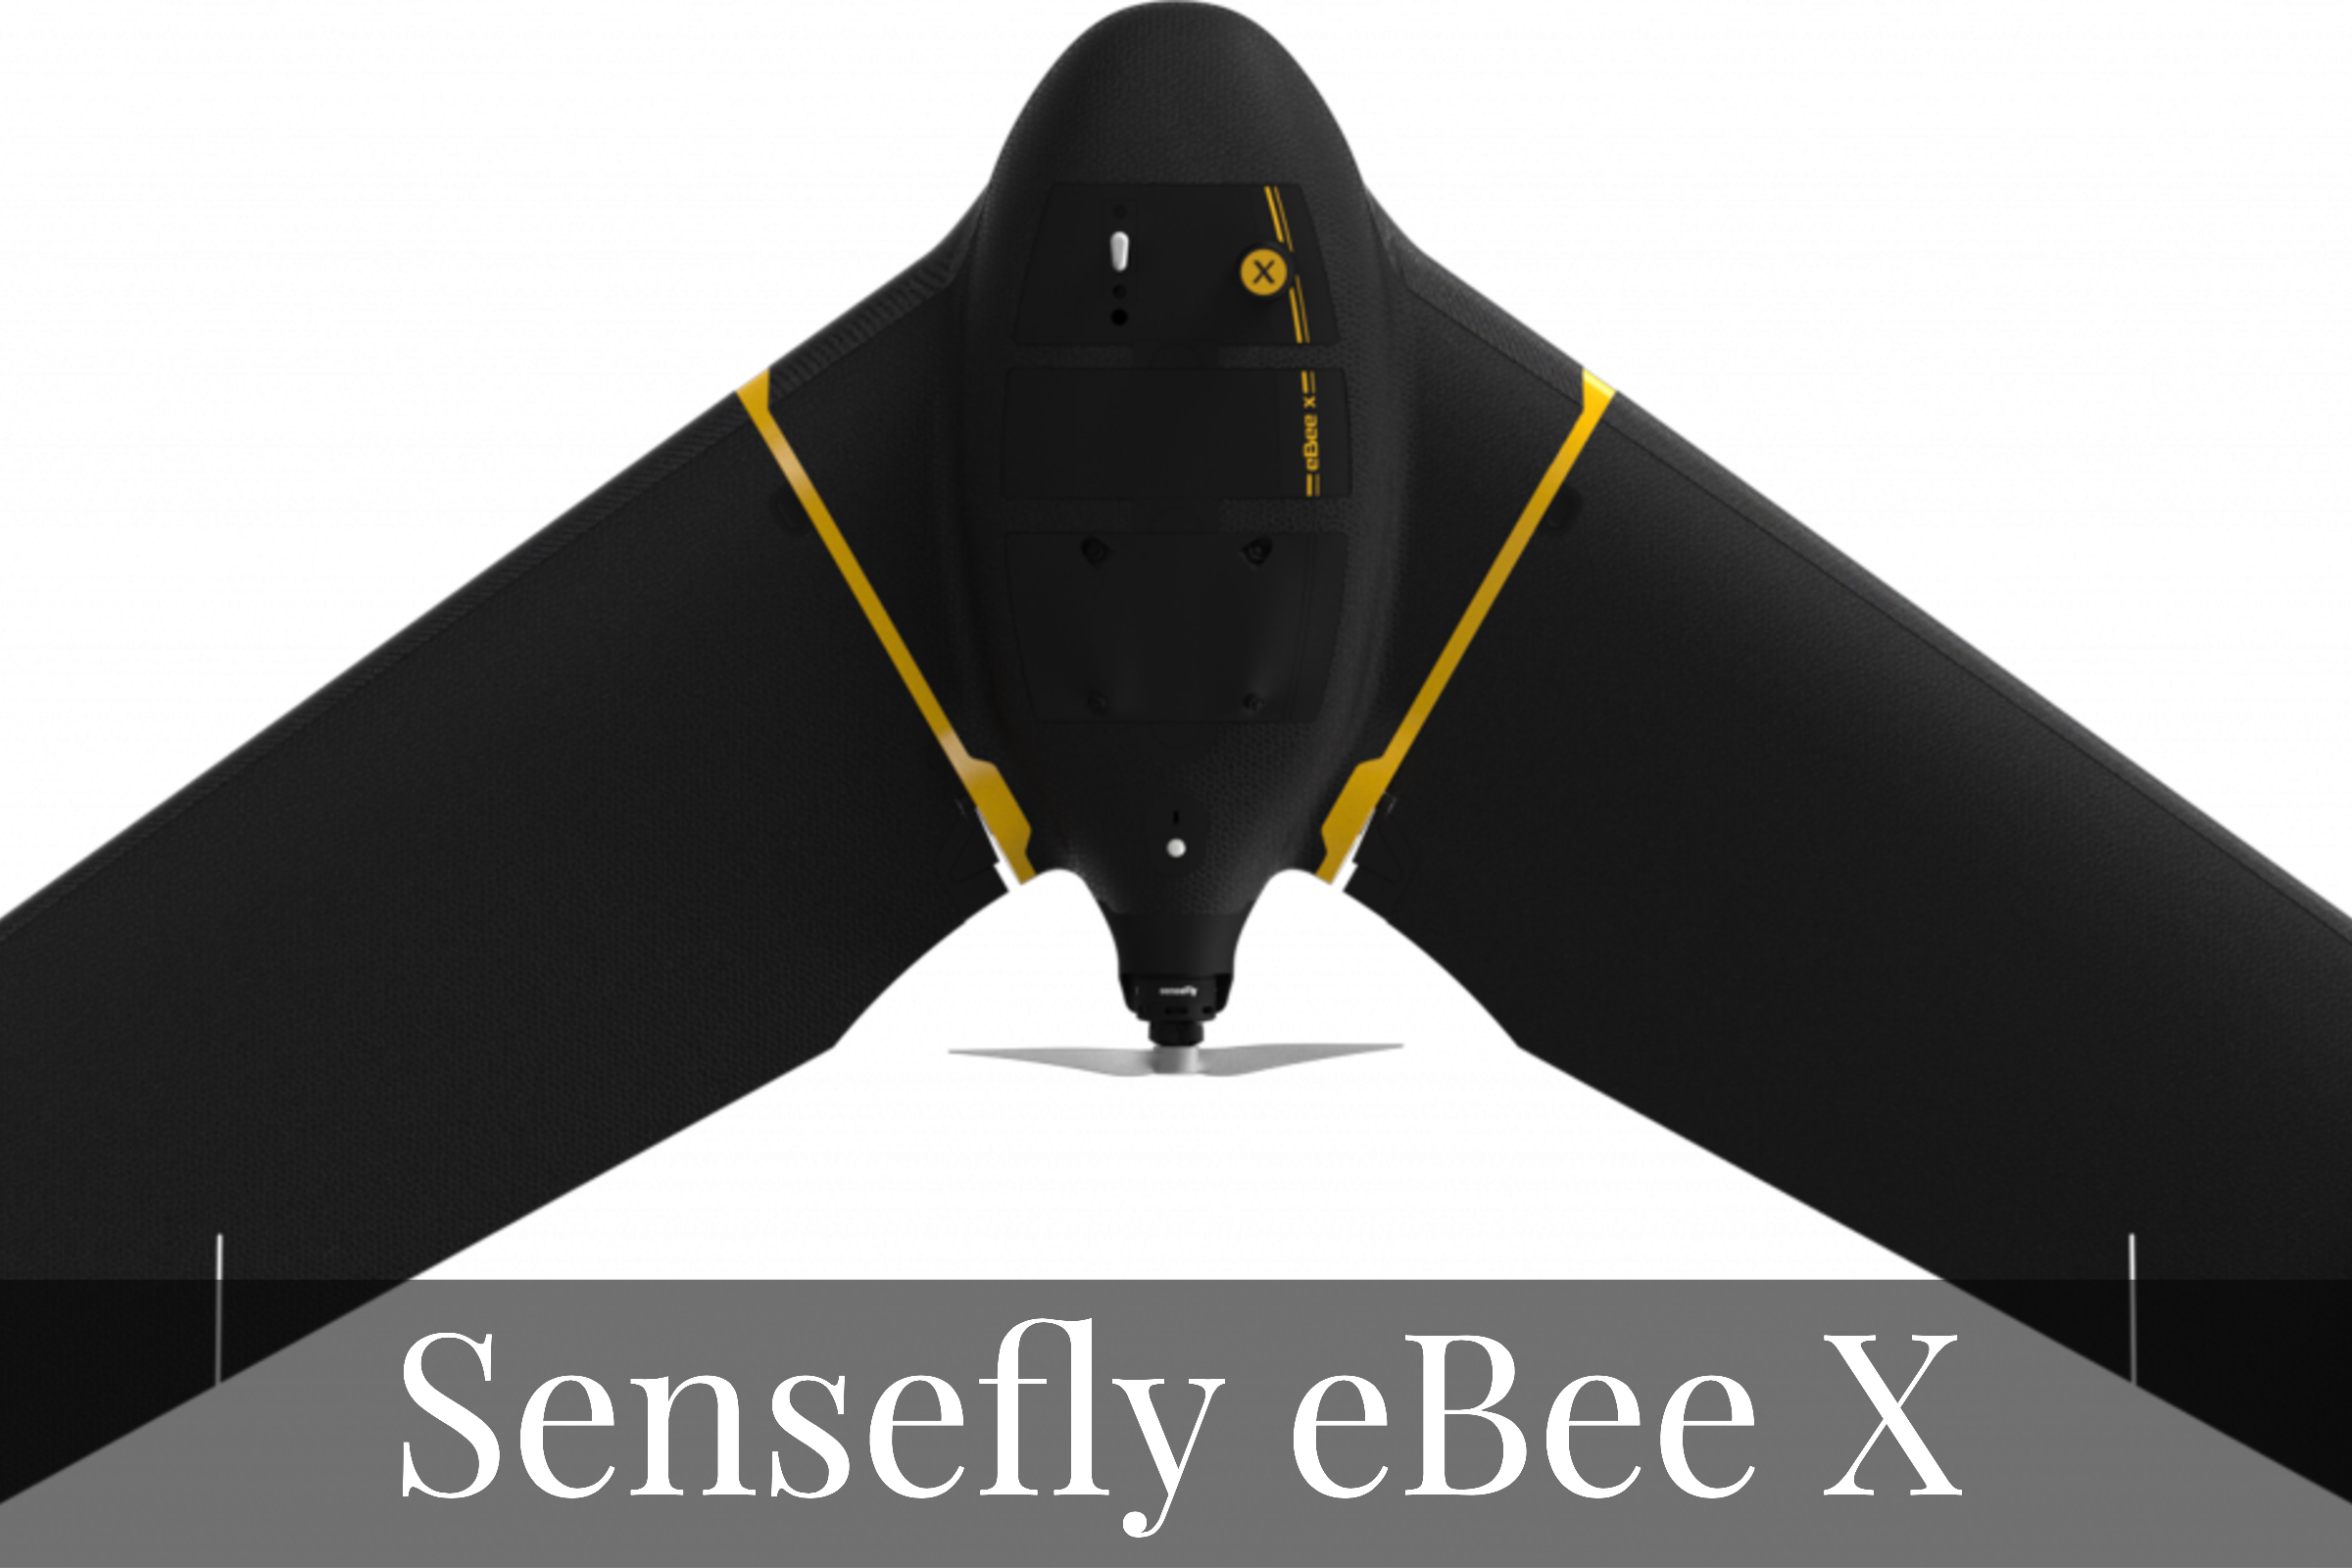 Sensefly Ebee X top professional drone